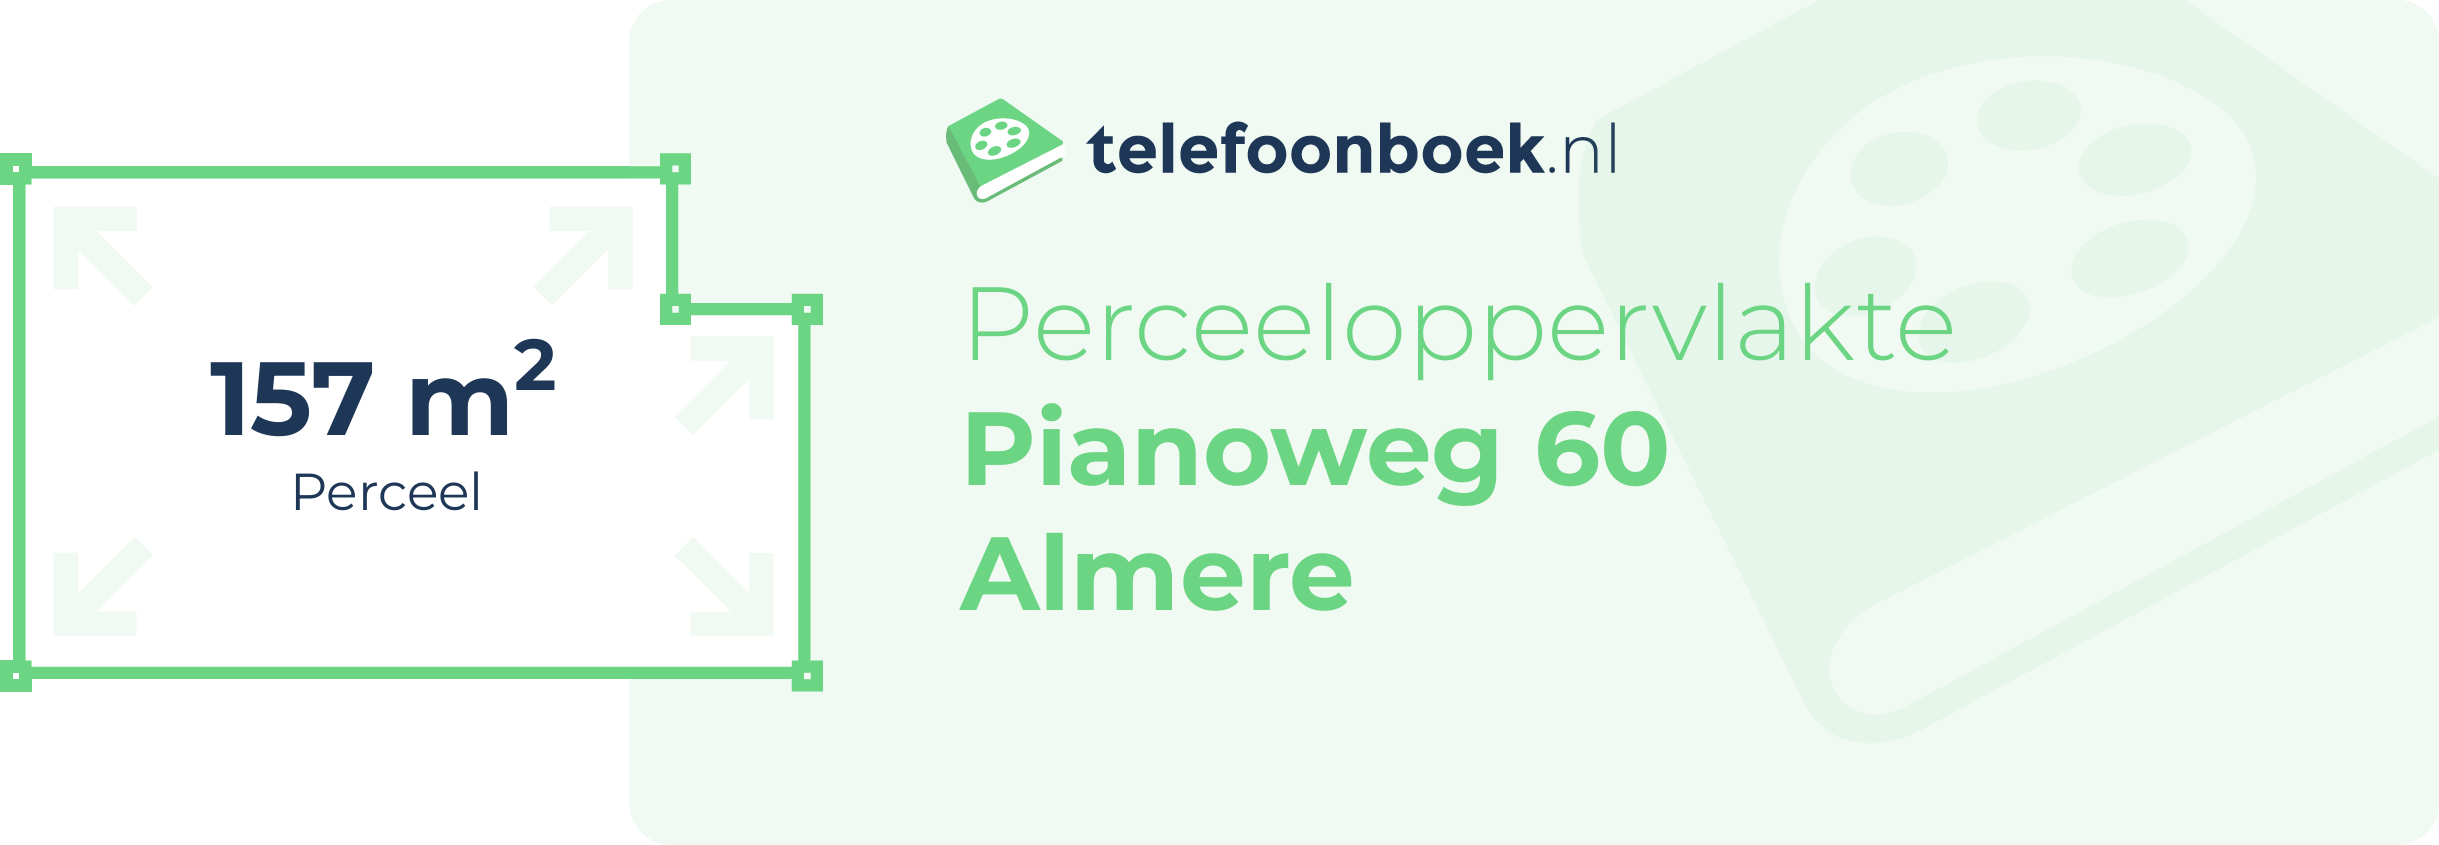 Perceeloppervlakte Pianoweg 60 Almere